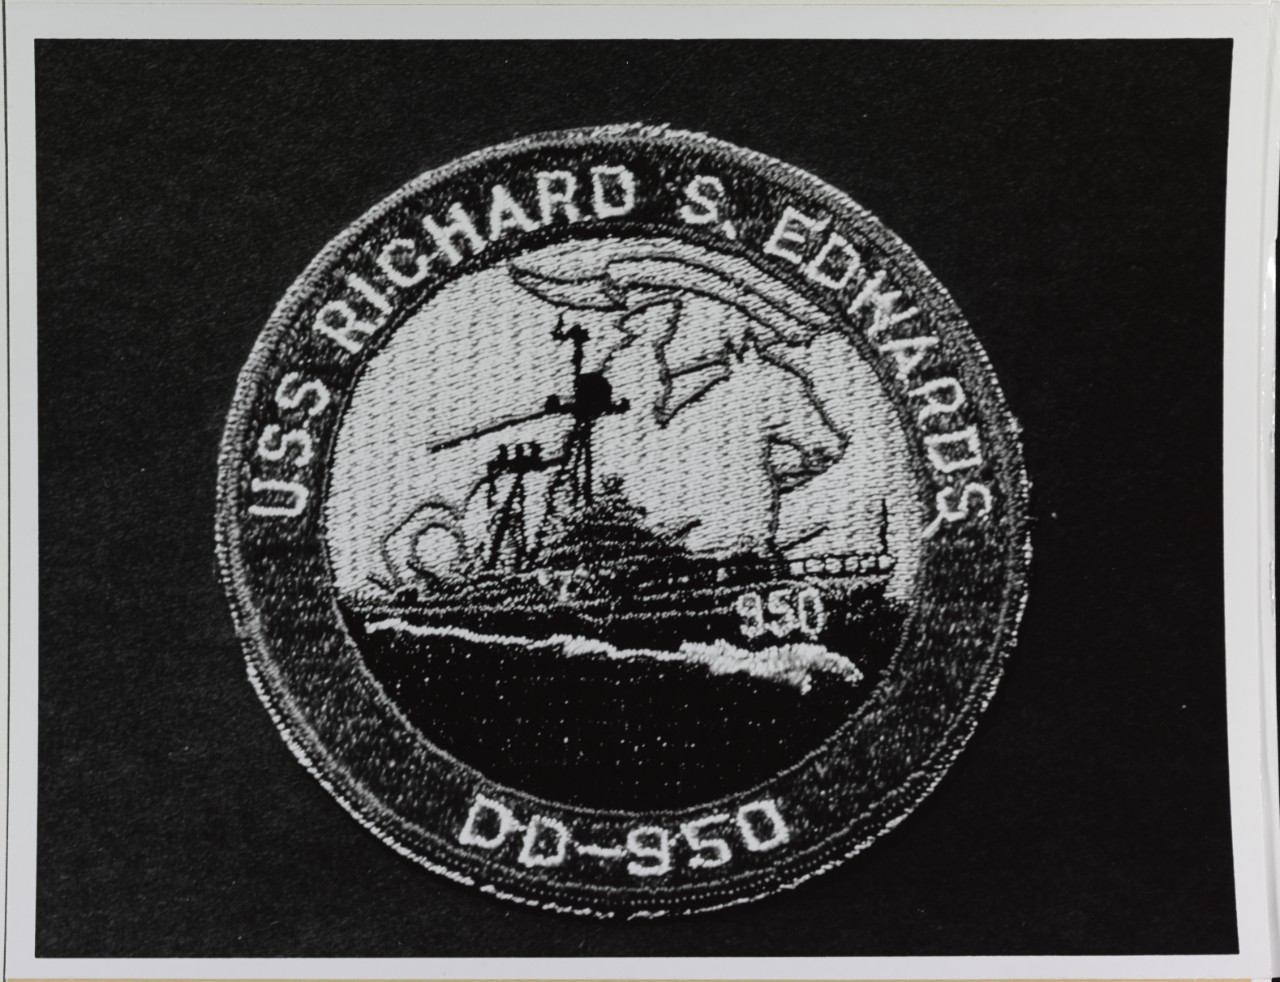 Insignia: USS RICHARD S. EDWARDS (DD-950)